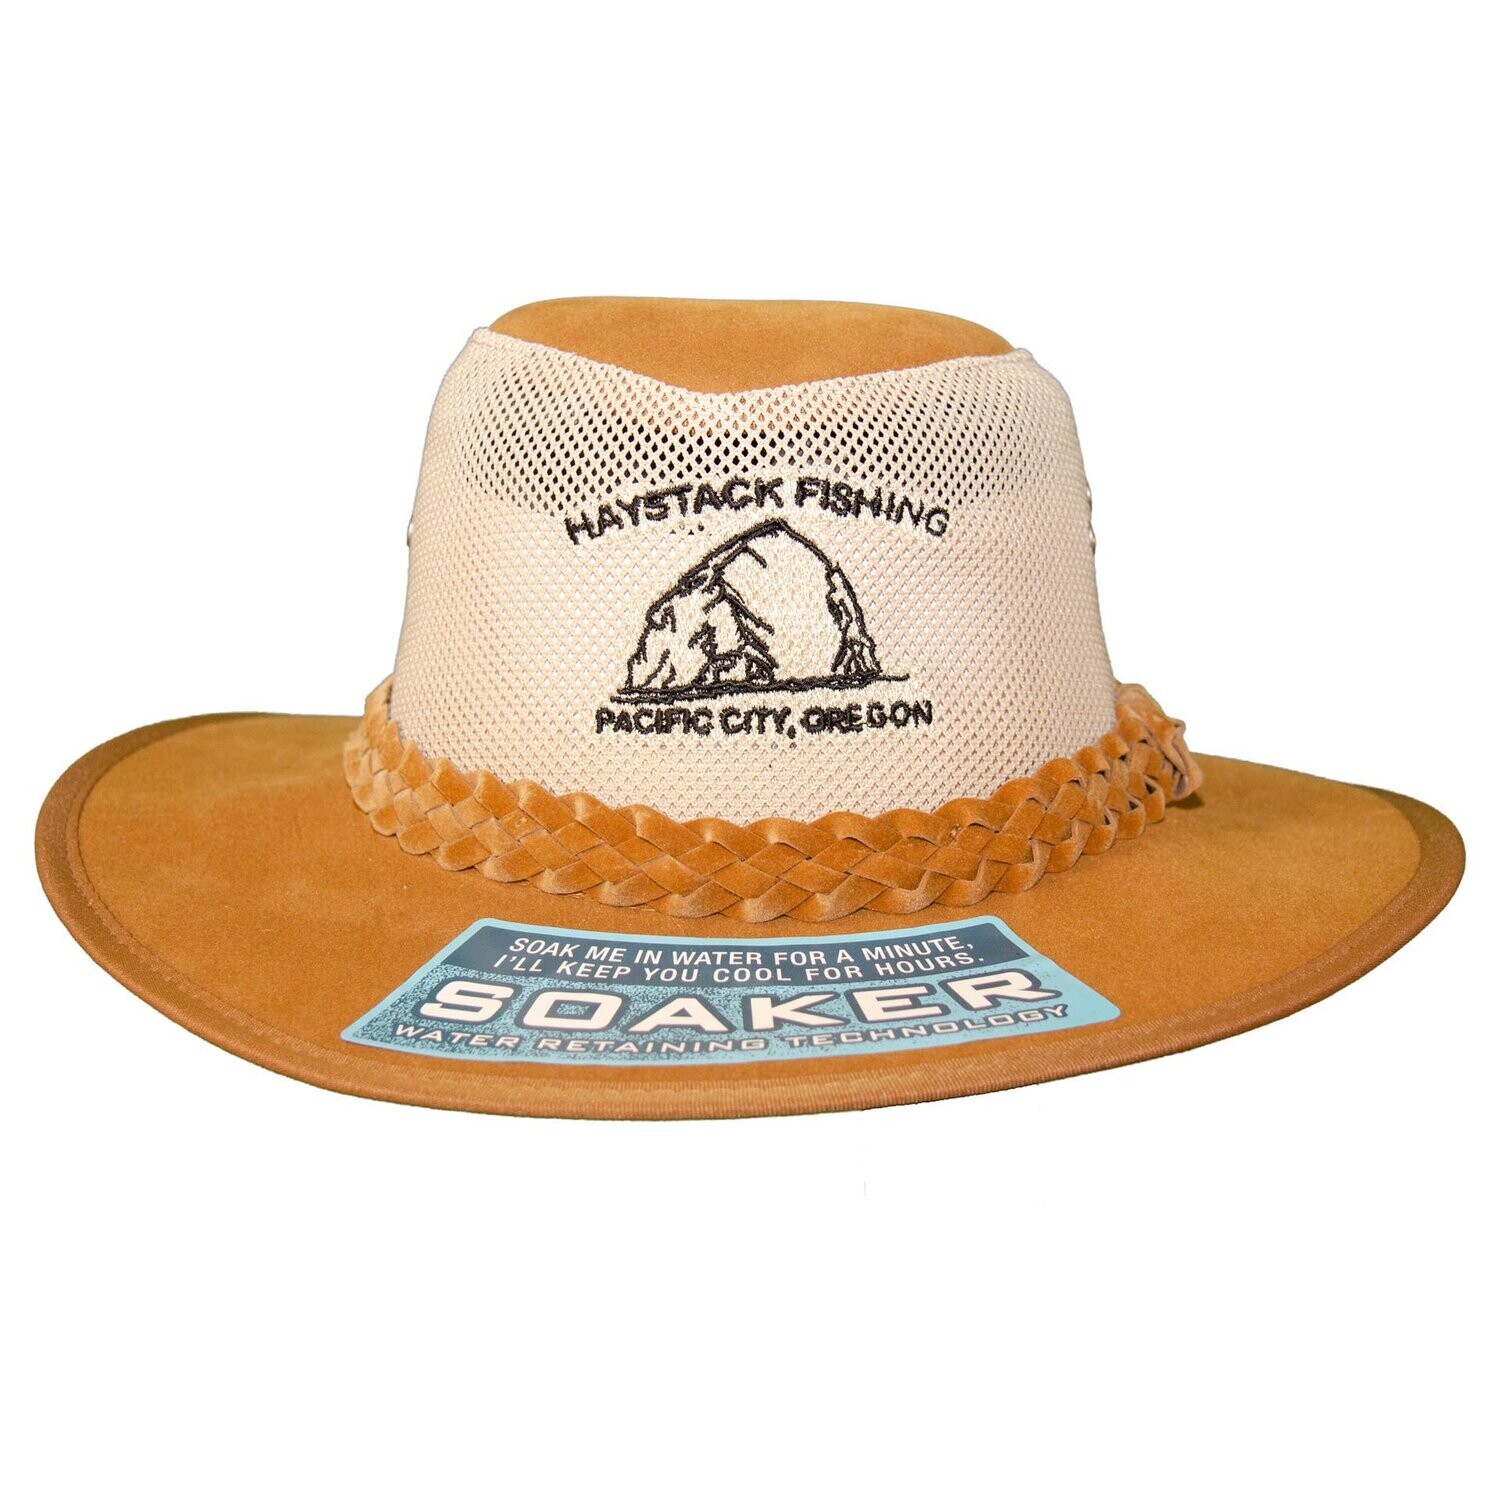 Haystack Fishing Soaker Hat